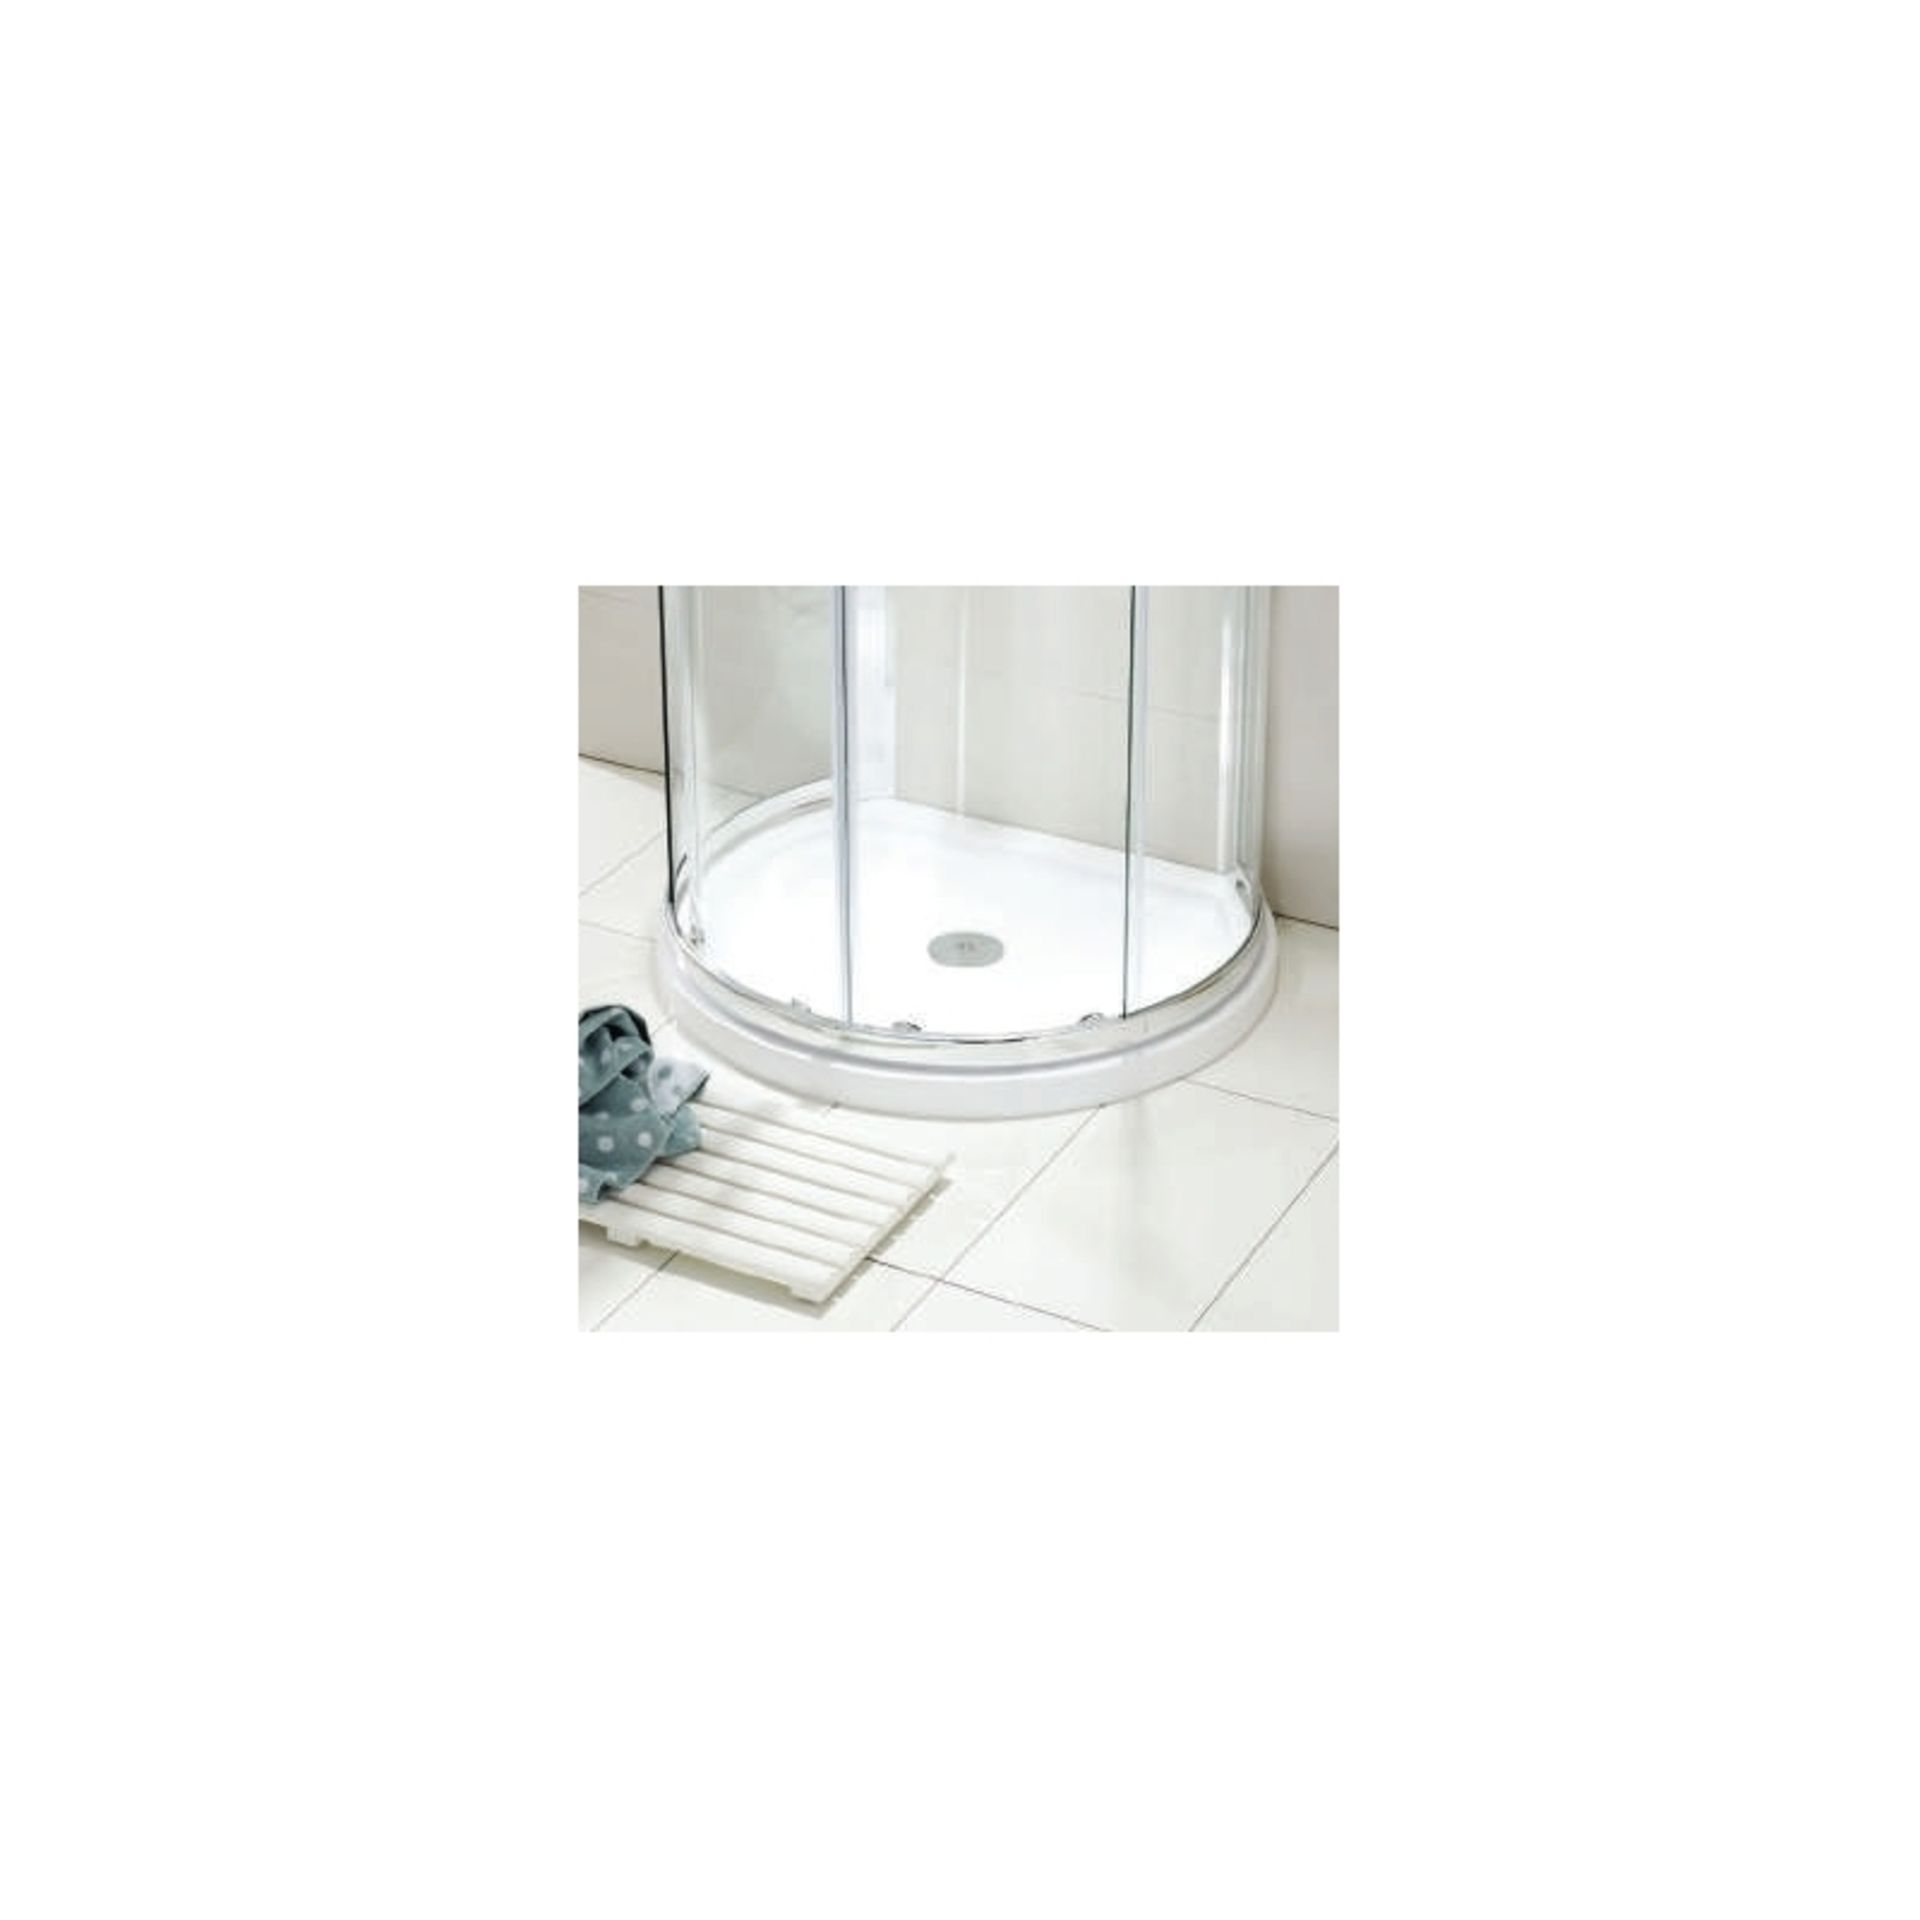 (PC129) Twyfords 770mm Hydro D Shape White Shower tray. Low profile ultra slim design Gel coat...( - Image 2 of 3